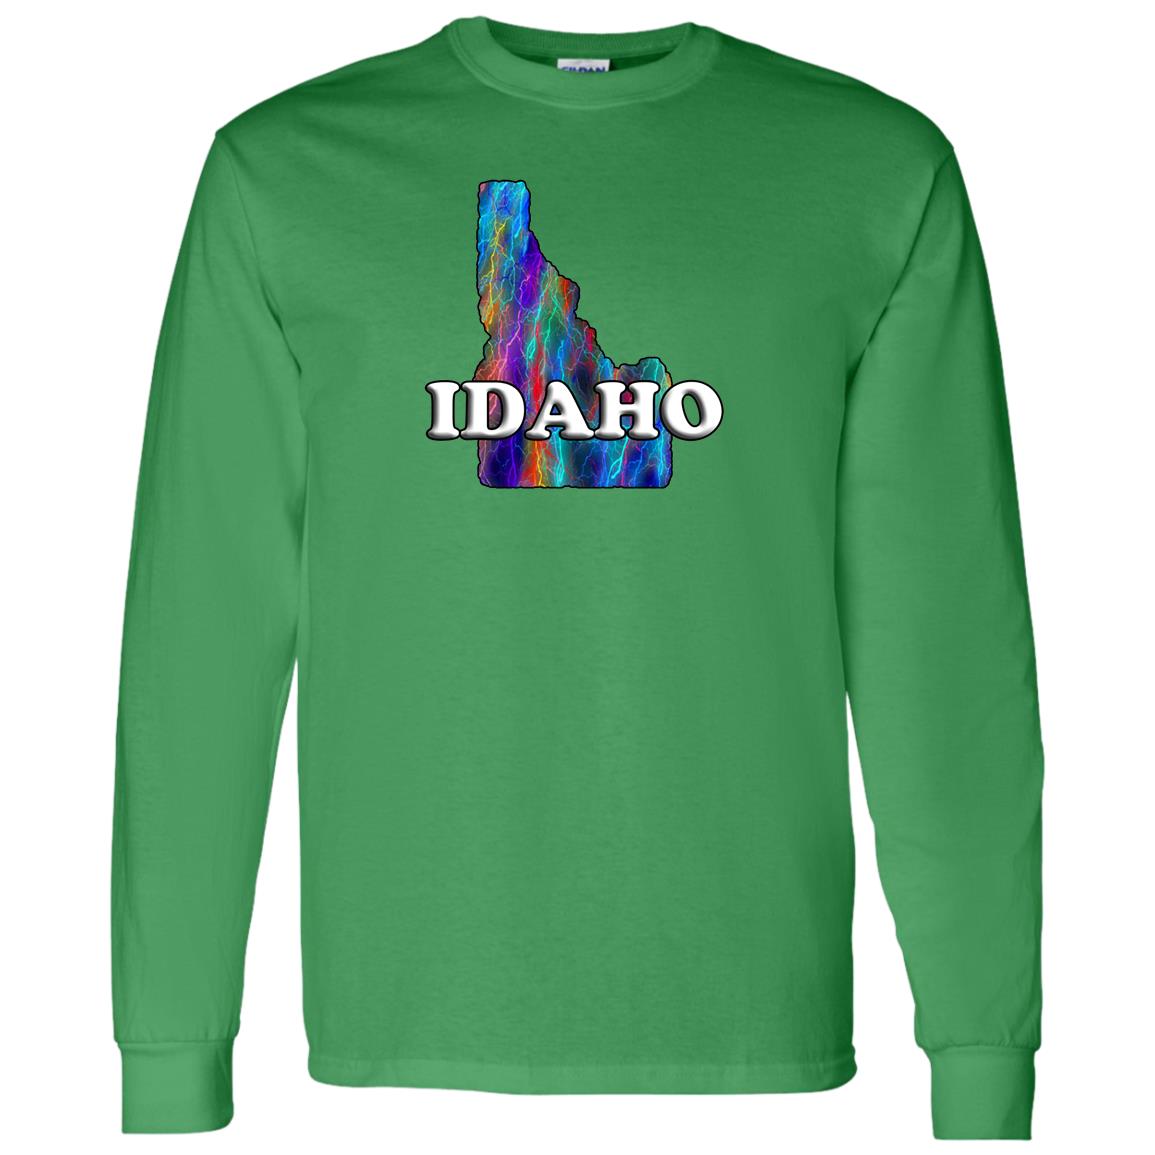 Idaho Long Sleeve State T-Shirt